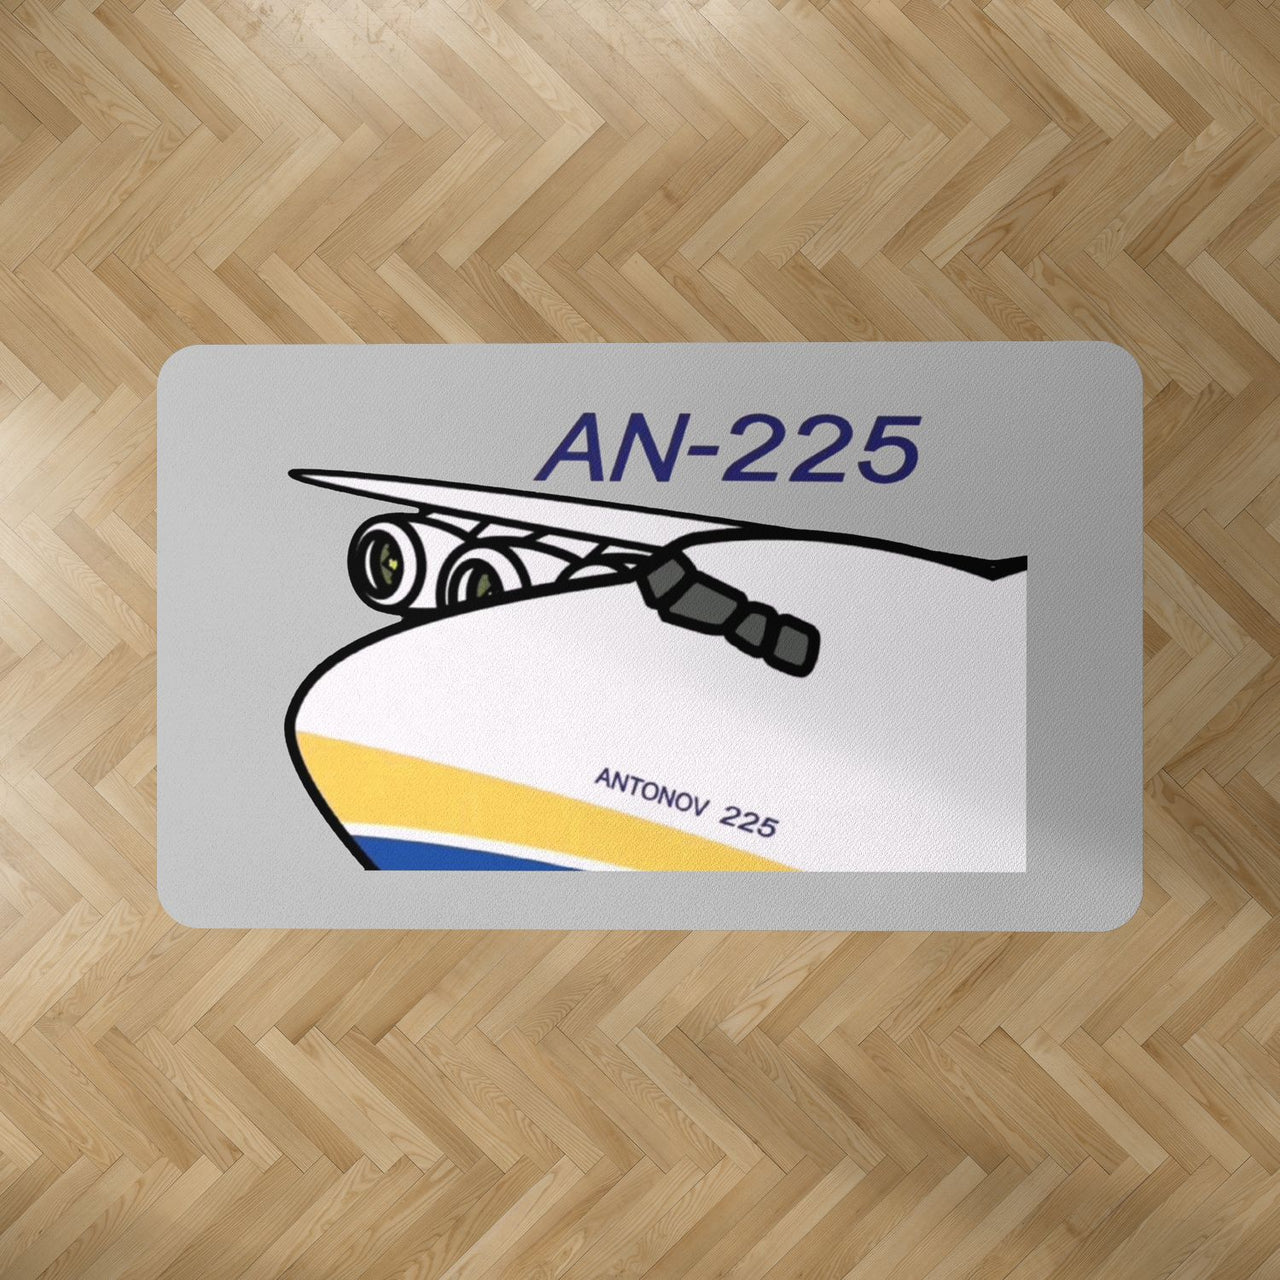 Antonov AN-225 (11) Designed Carpet & Floor Mats